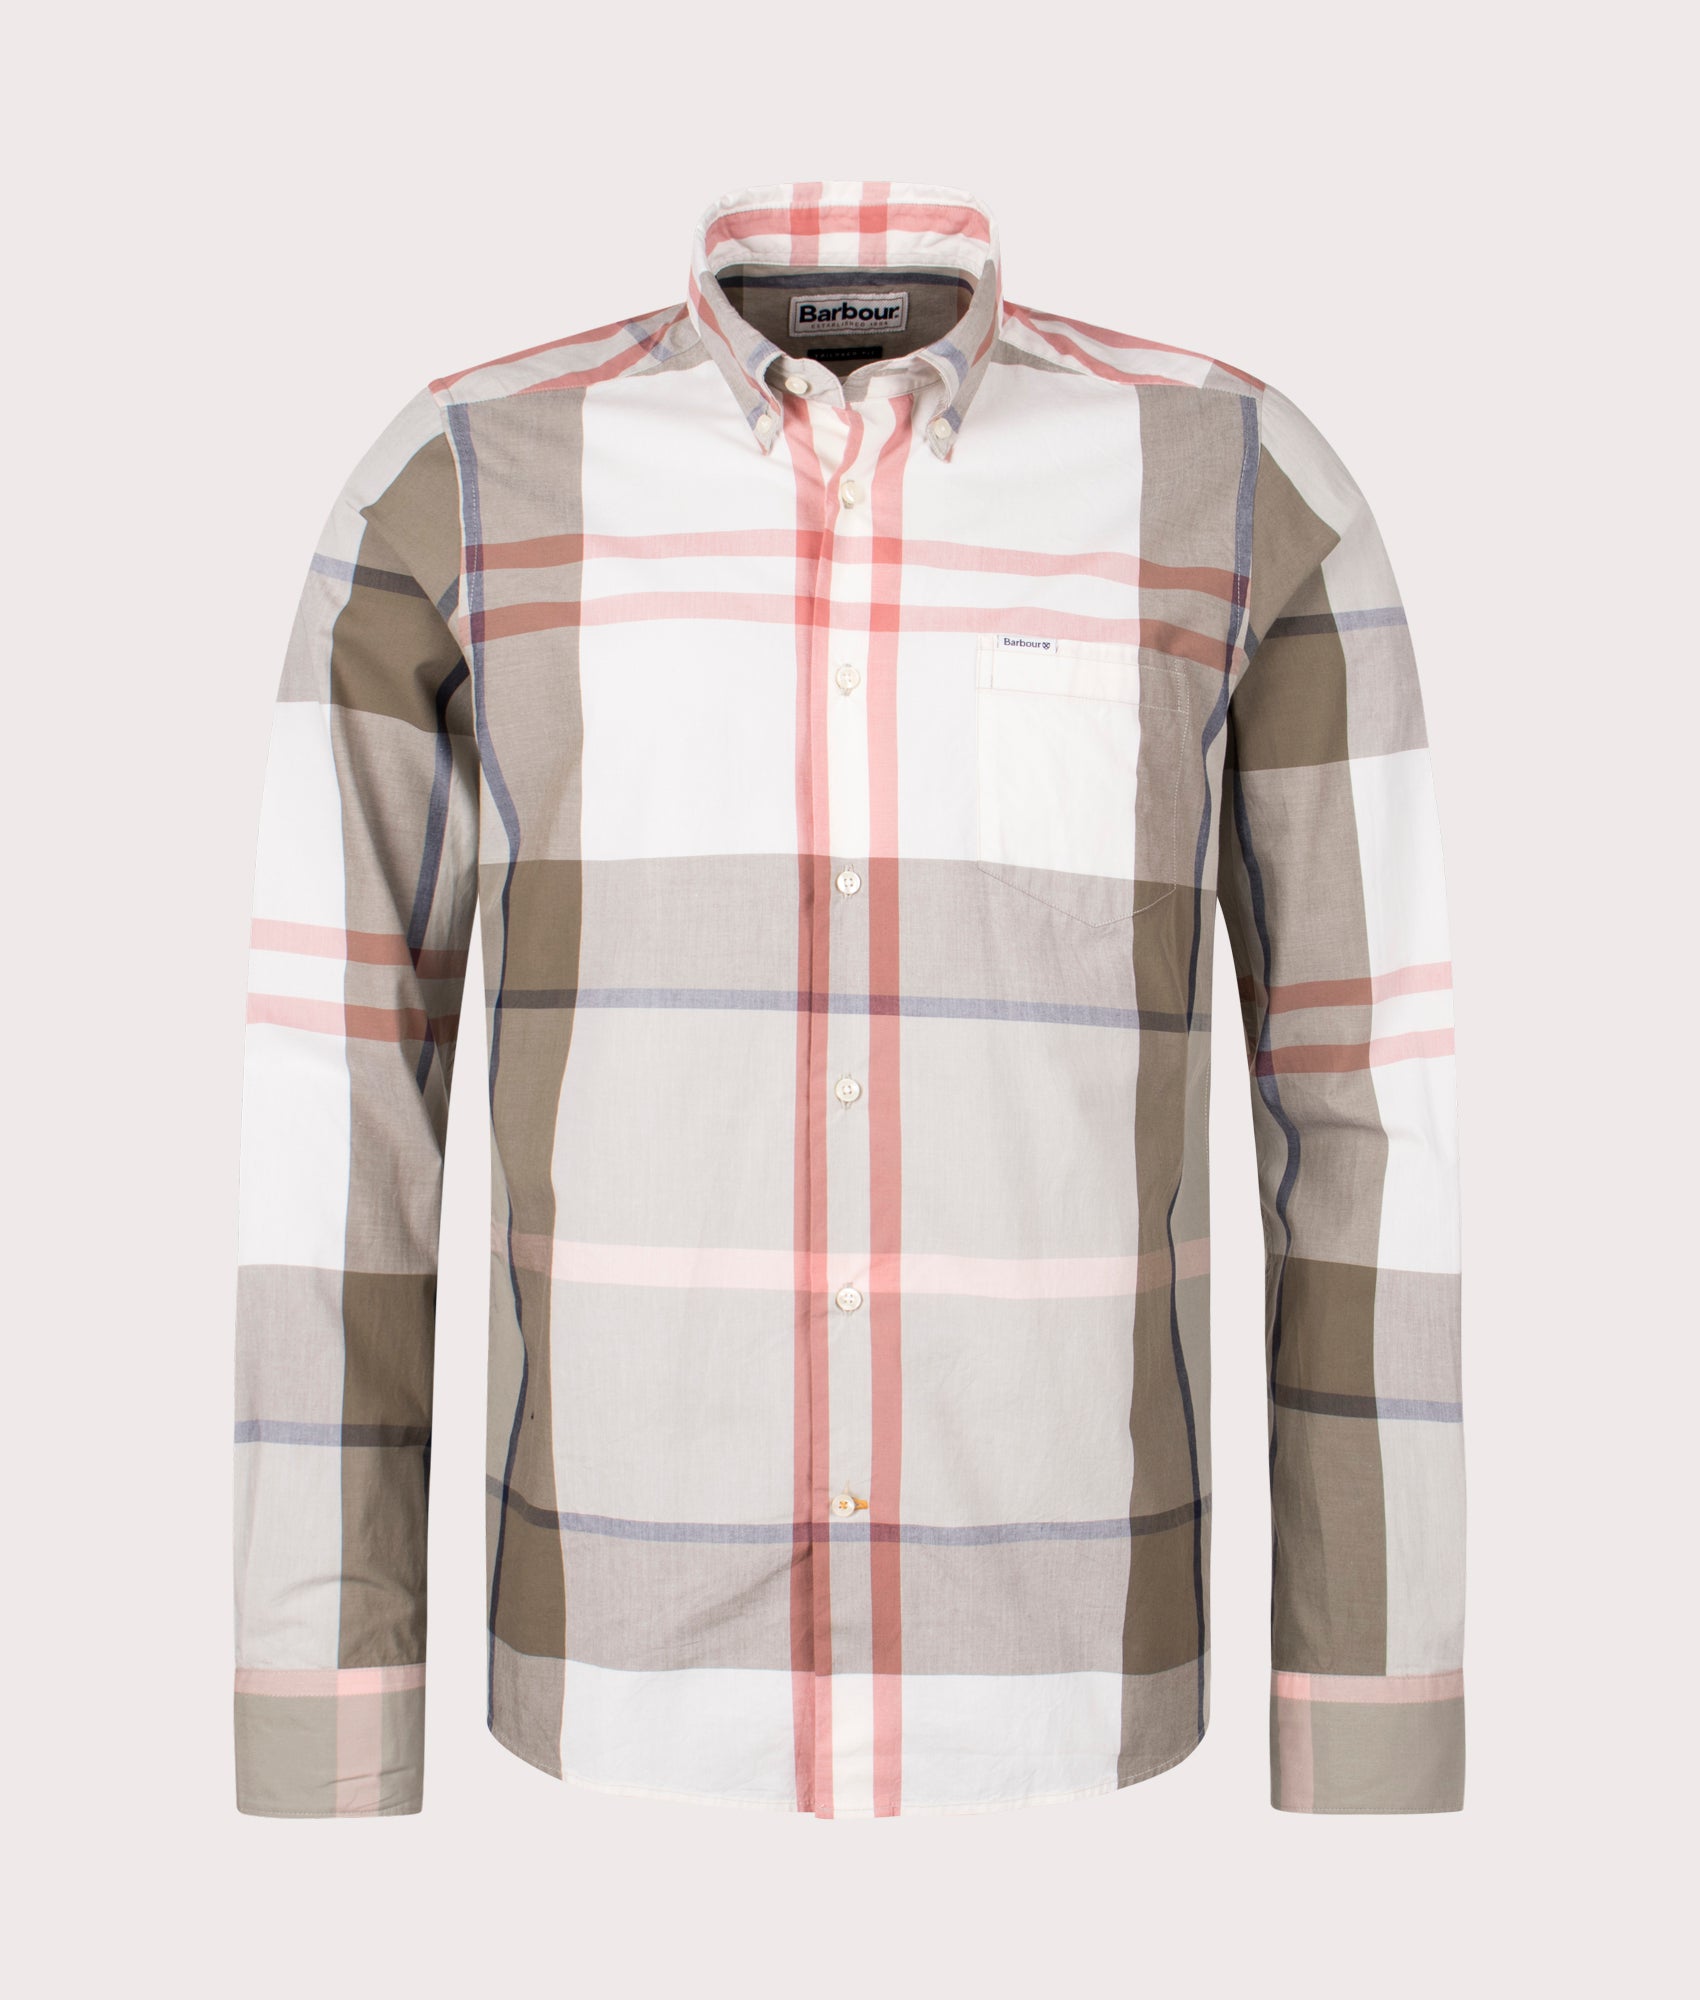 Barbour Lifestyle Mens Harris Shirt - Colour: TN24 Glenmore Olive Tartan - Size: XXL